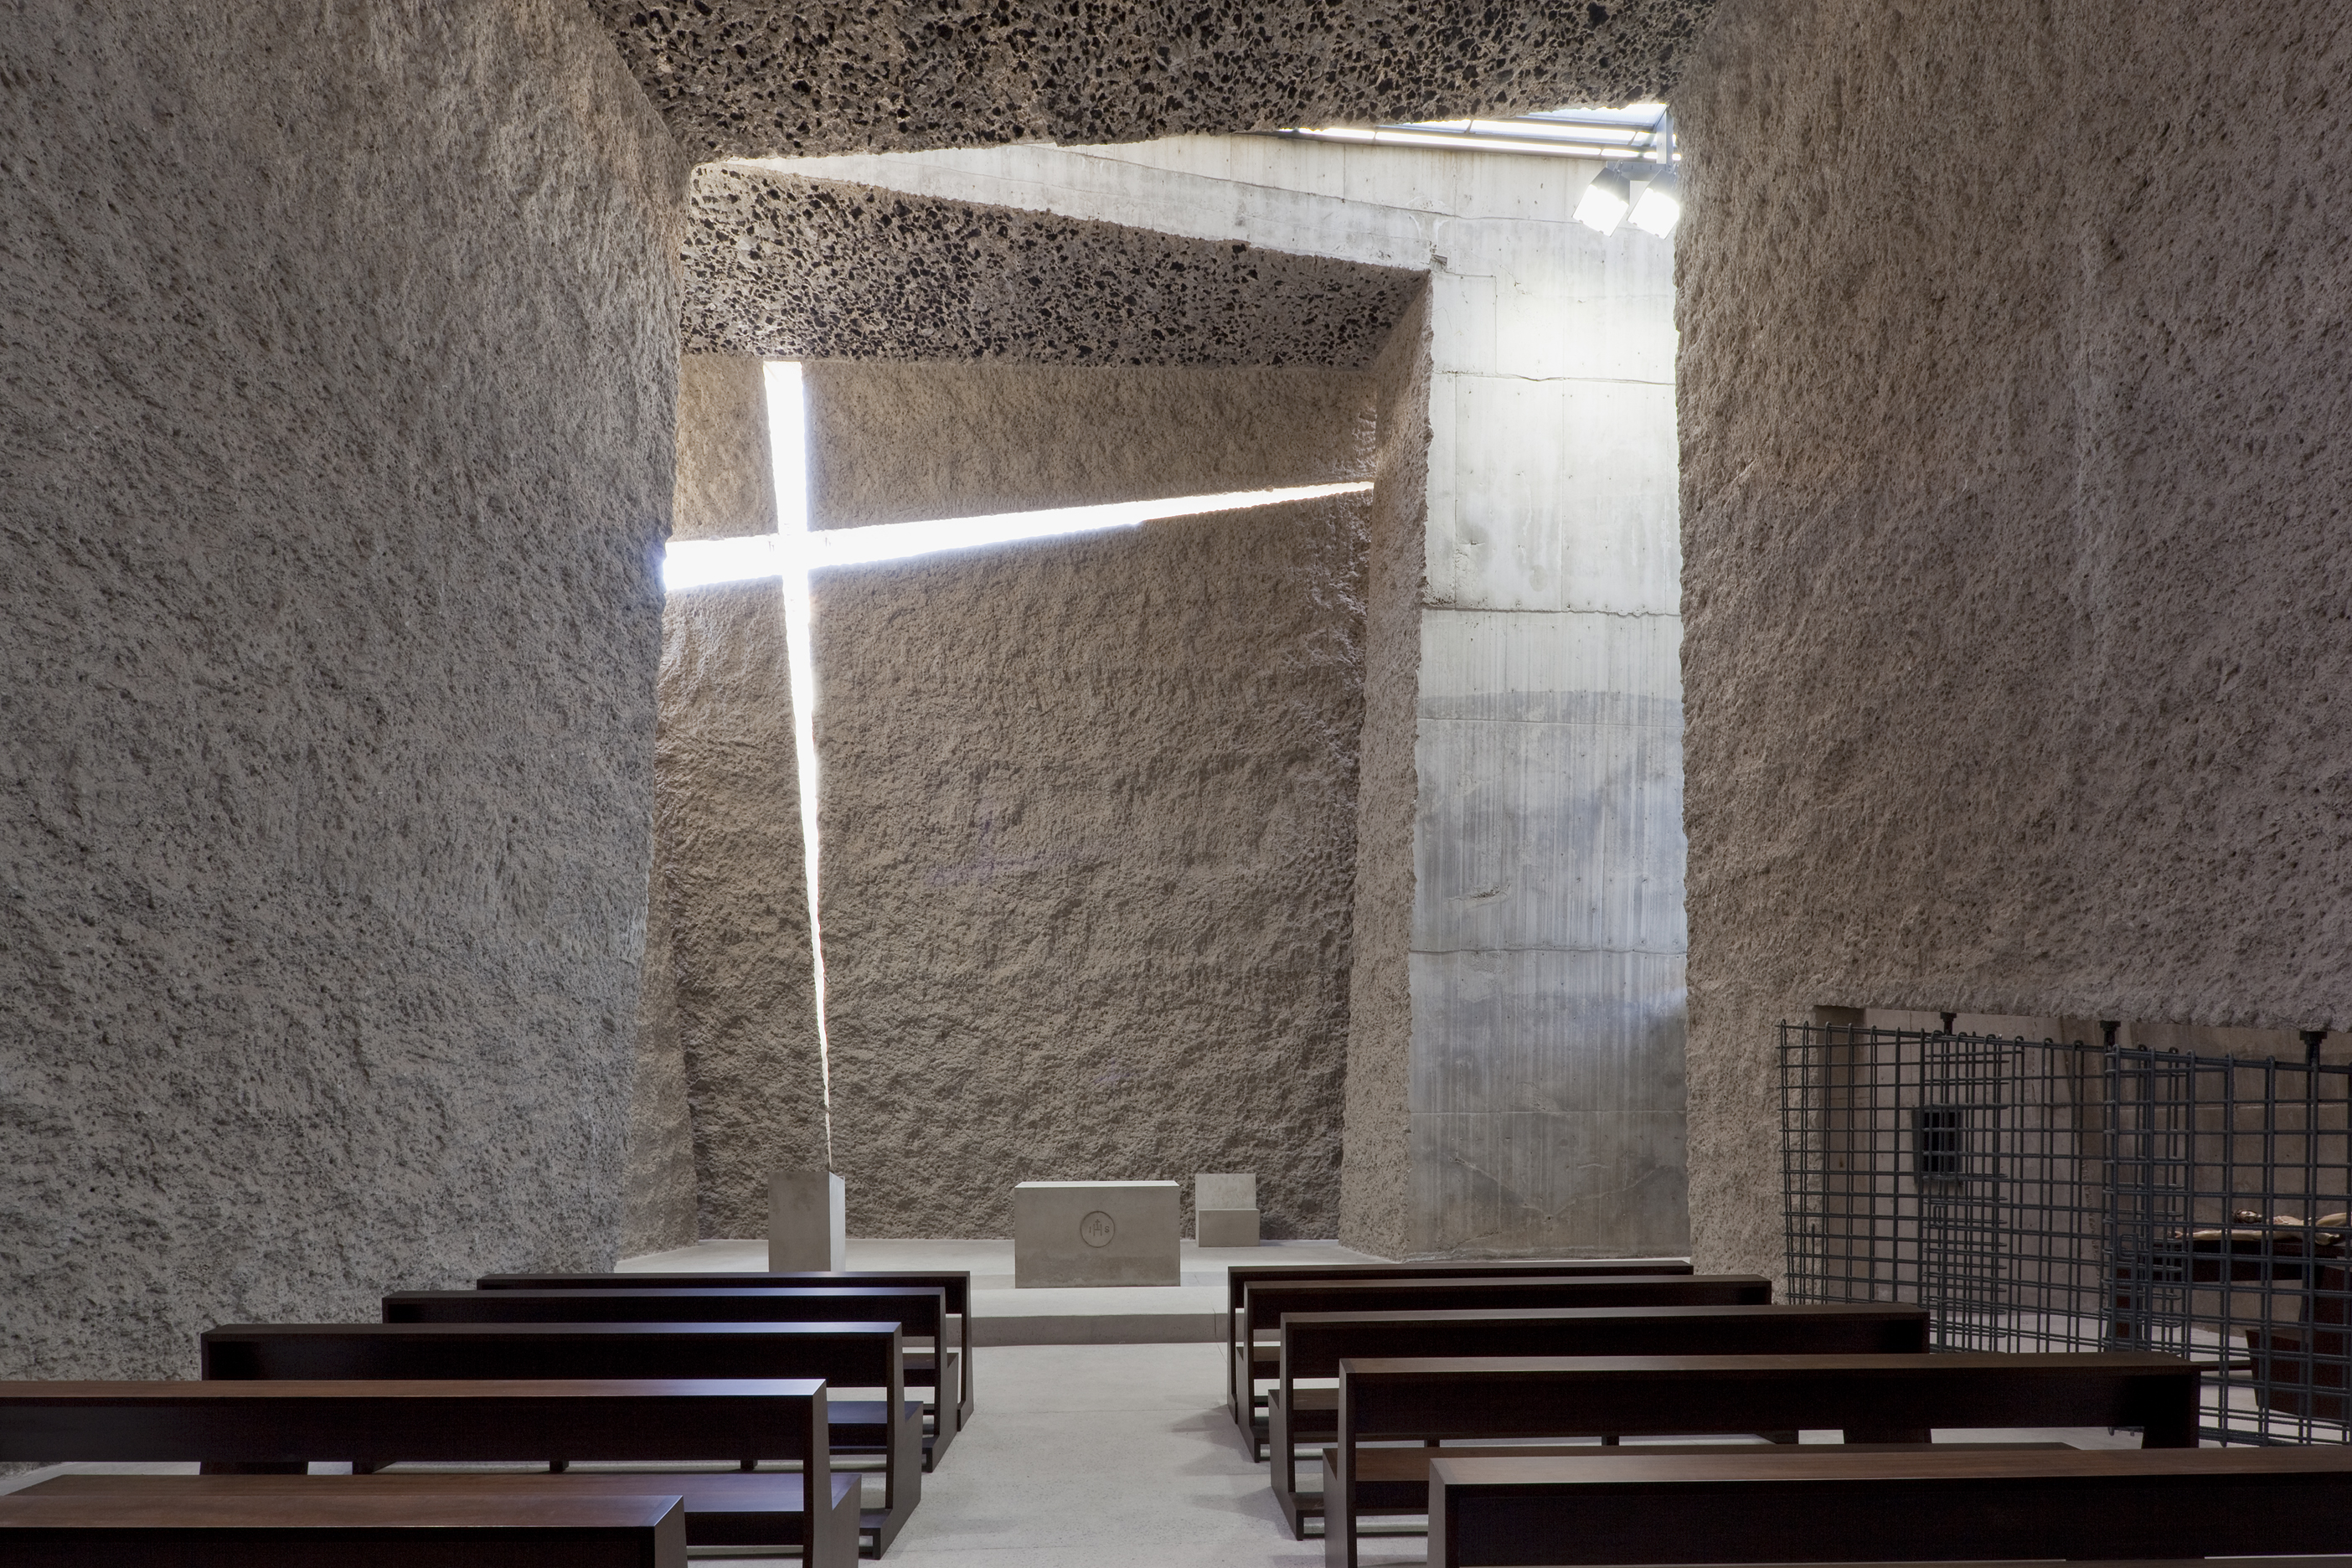 The Holy Redeemer Church designed by Fernando Menis